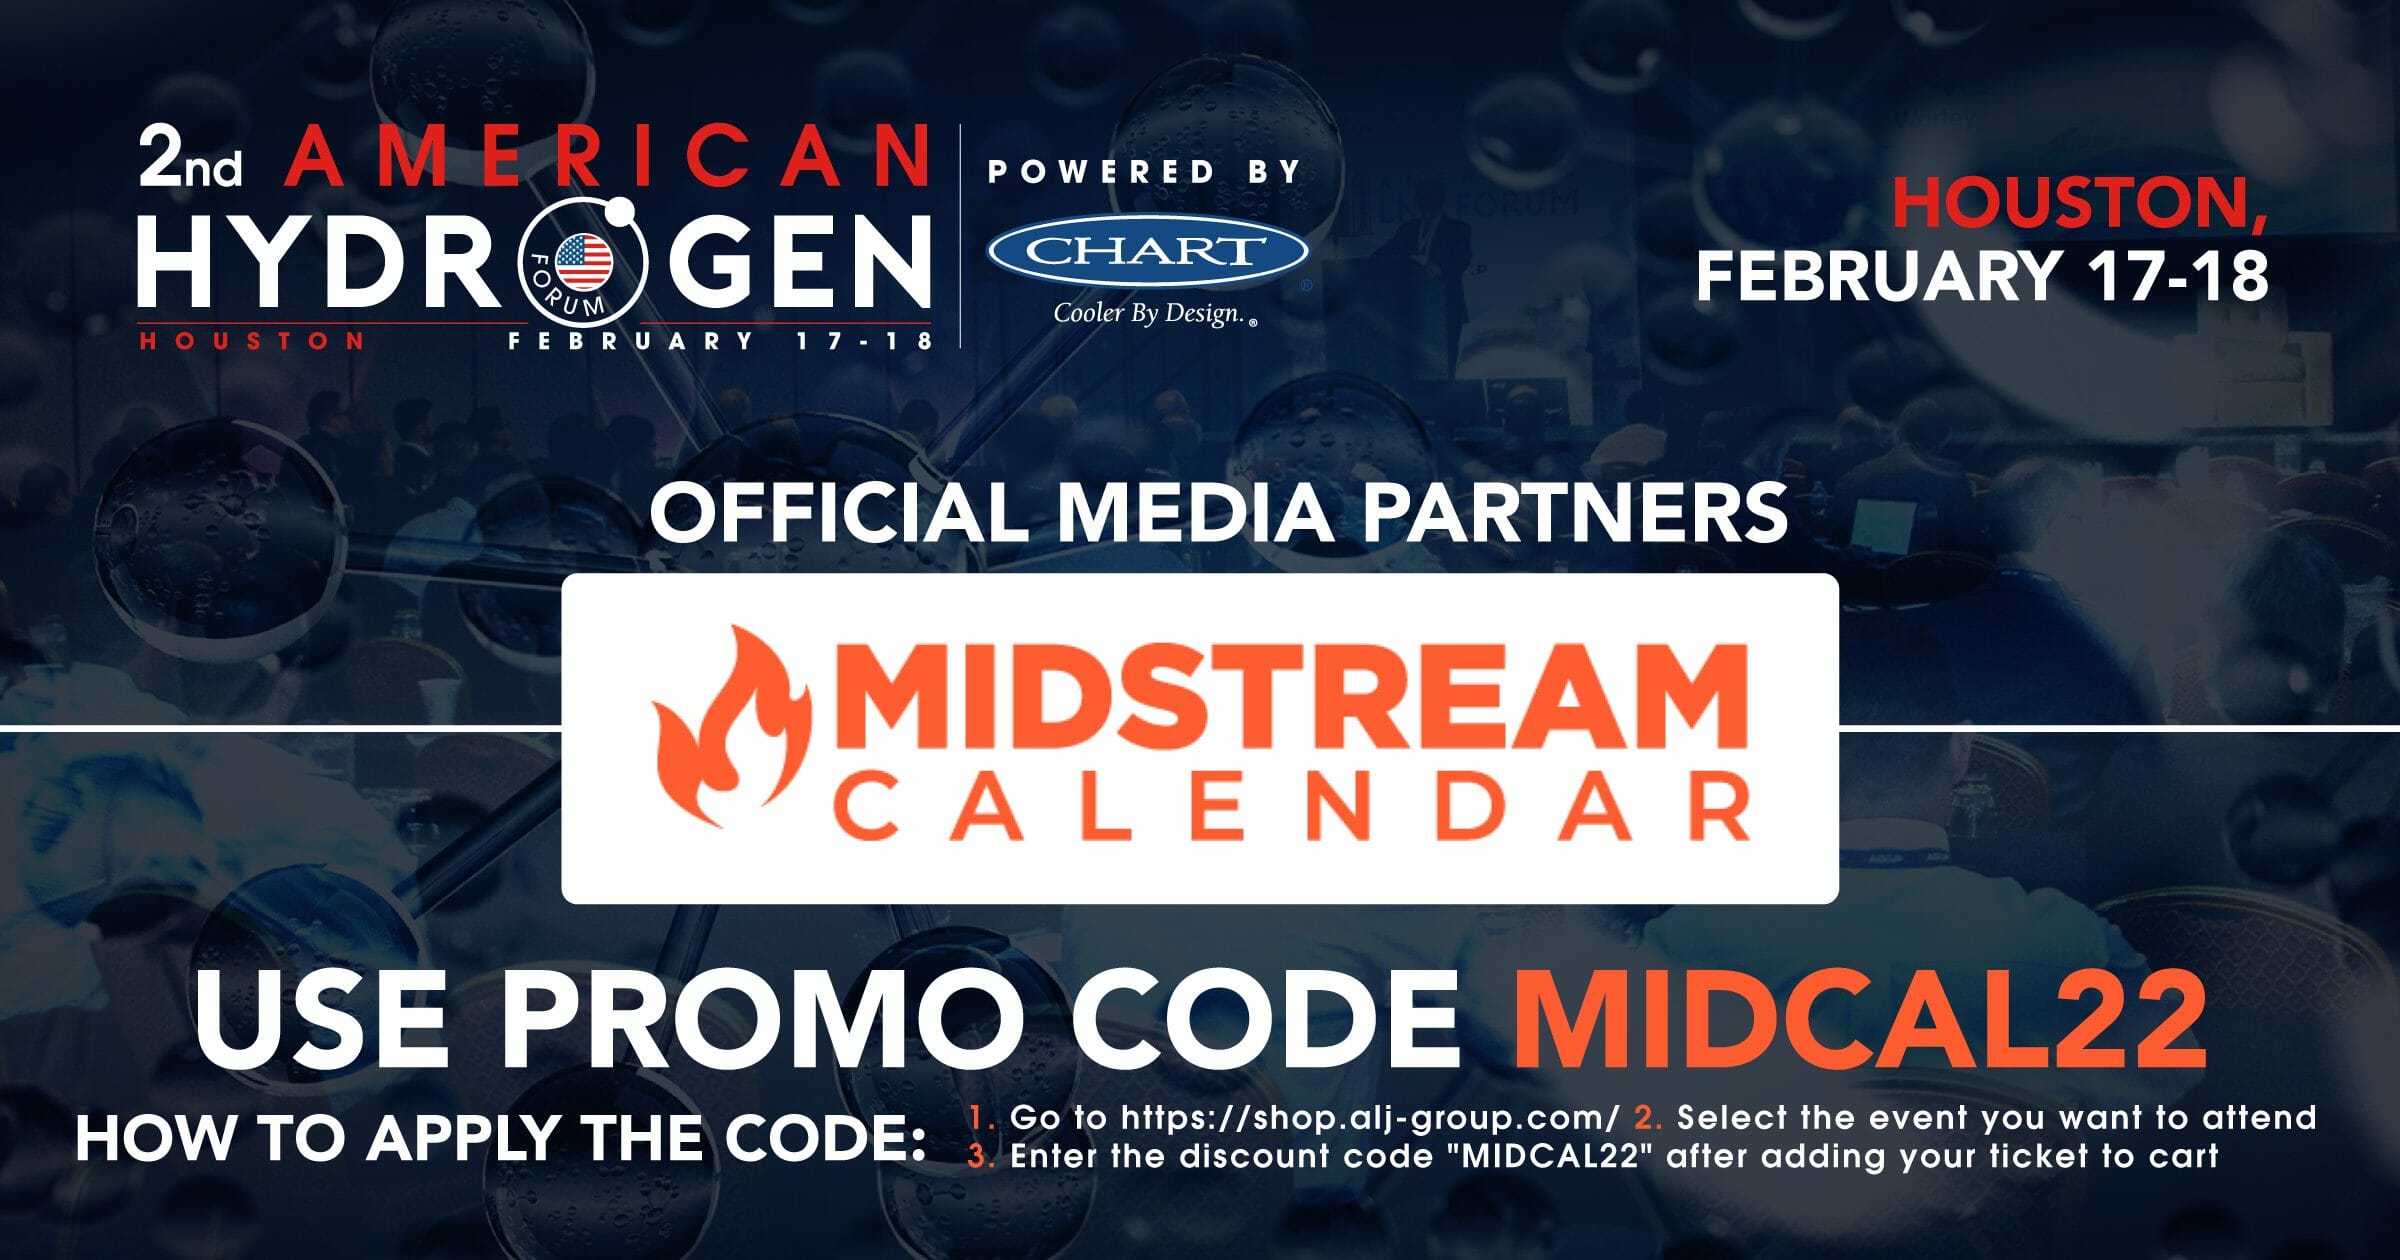 Midstream Calendar Oil and Gas Events Houston